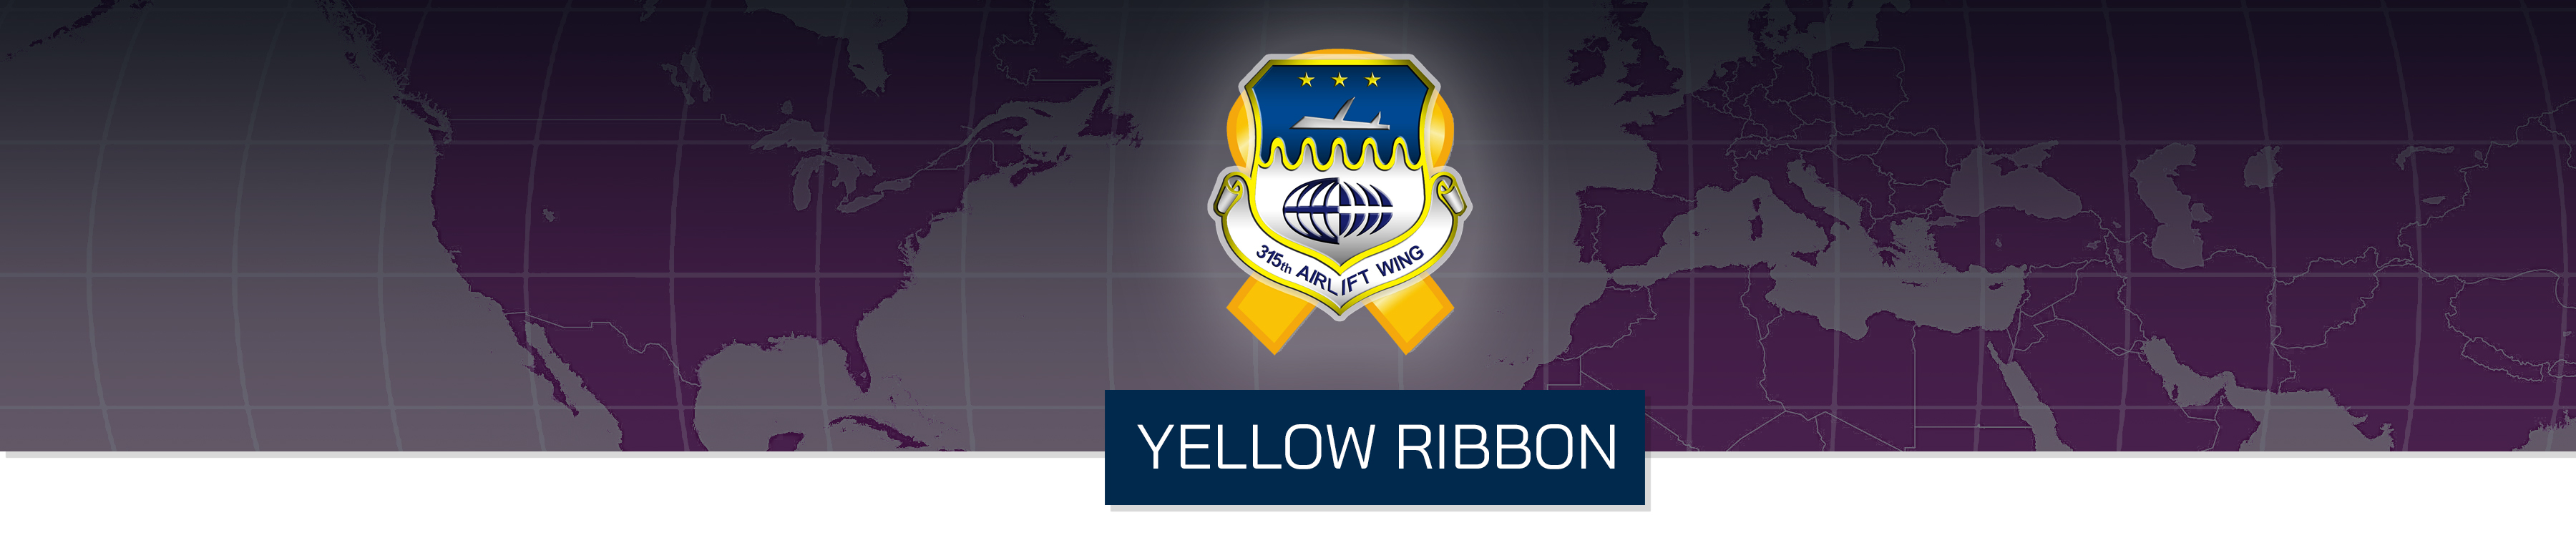 Yellow Ribbon Program Header